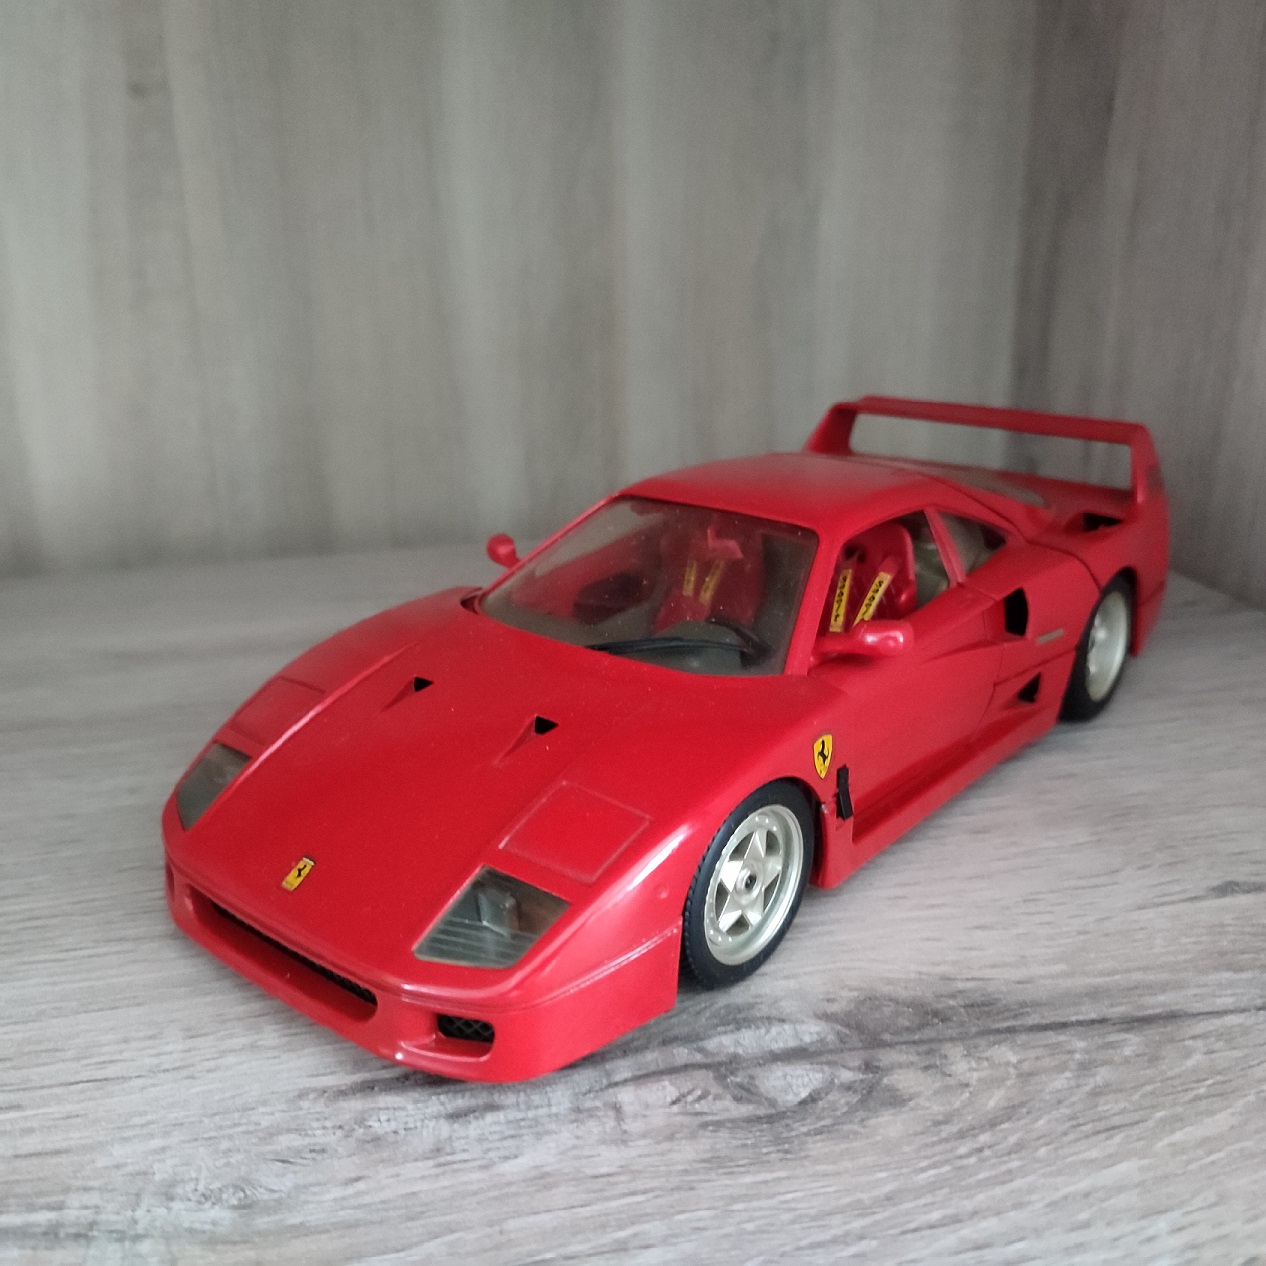 Pièce détachée miniature Ferrari F40 Burago Bburago 1/18 1/18e 1/18ème